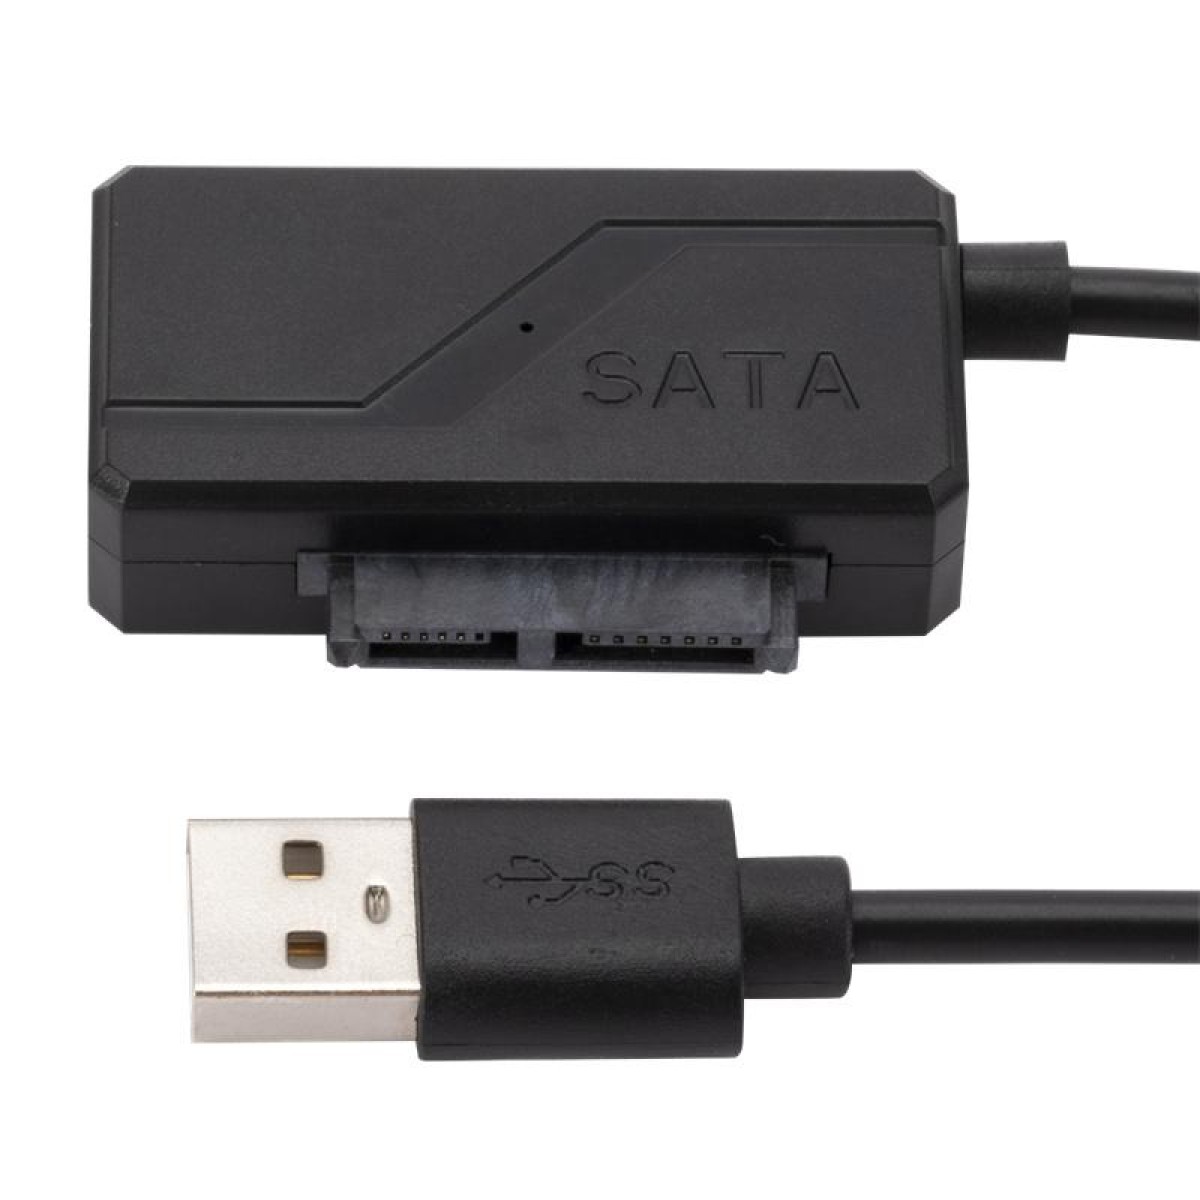 SATA to USB 2.0 Adatper Cable Optical Drive Cable